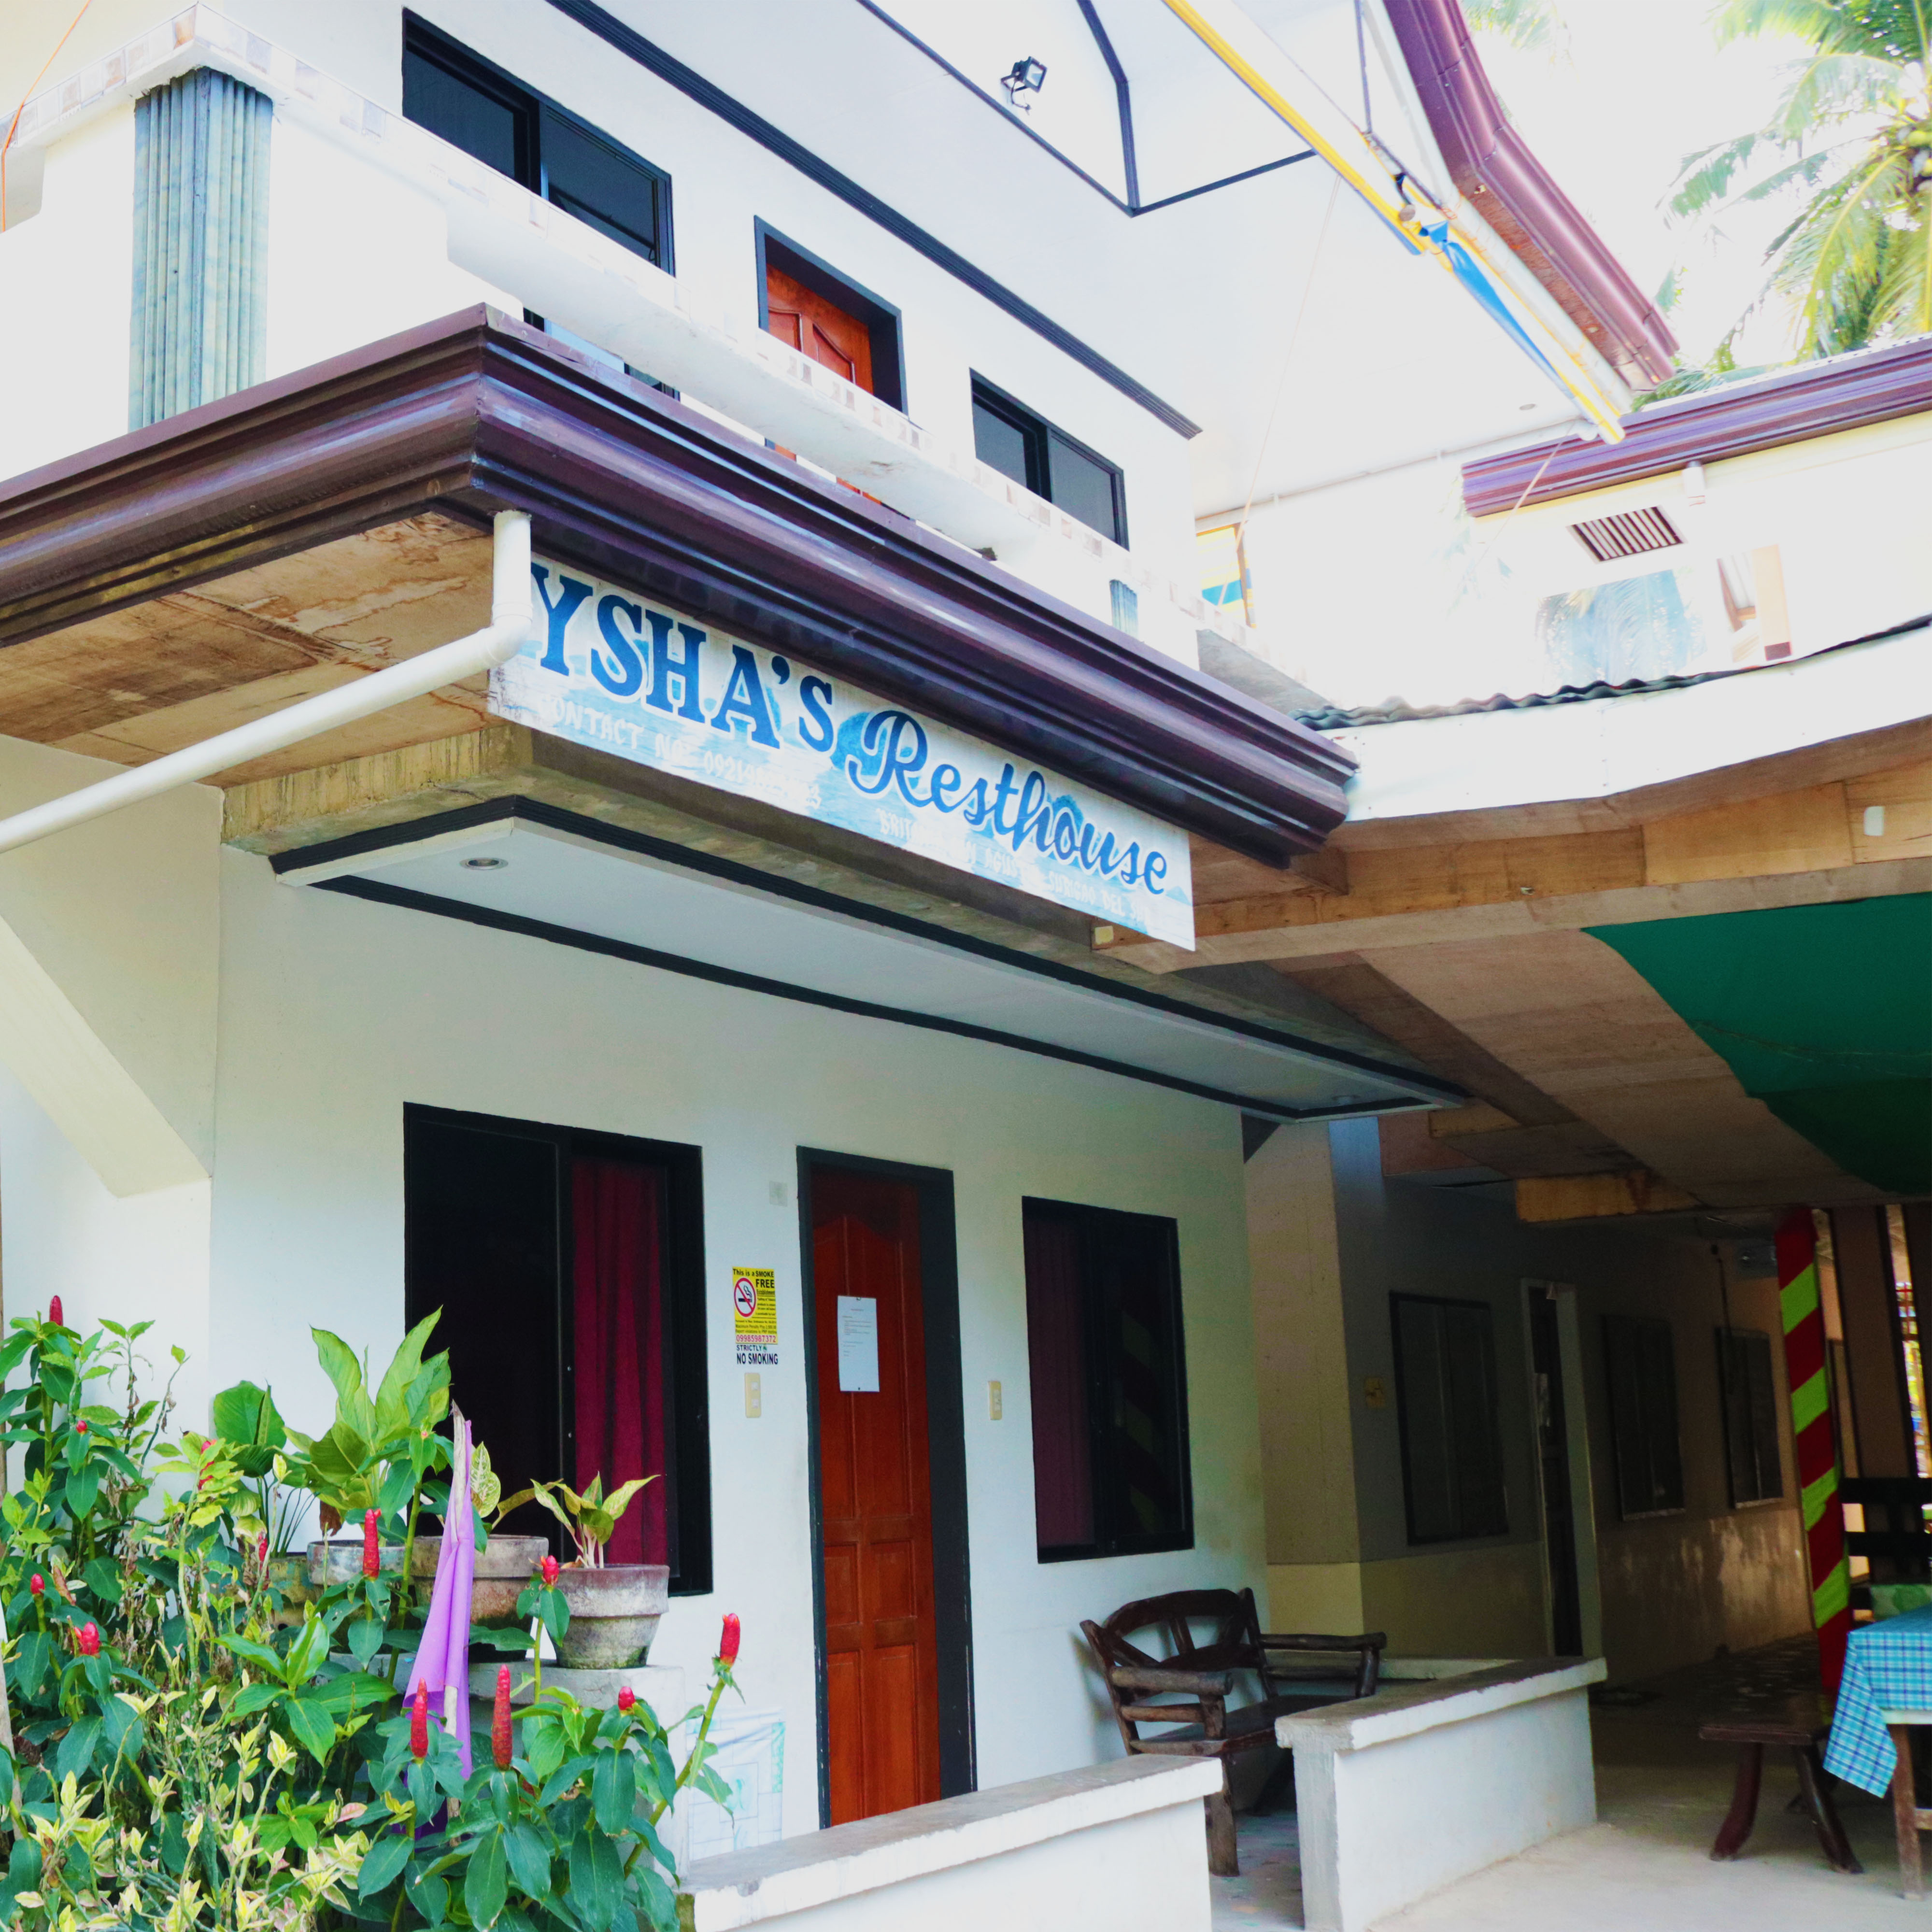 <b class="font-bara"><i class="bi bi-geo-fill h4"></i> YSHA'S REST HOUSE</b> <br/>Located at Brgy. Britania, San Agustin, Surigao del Sur.
Contact No: 09214829523